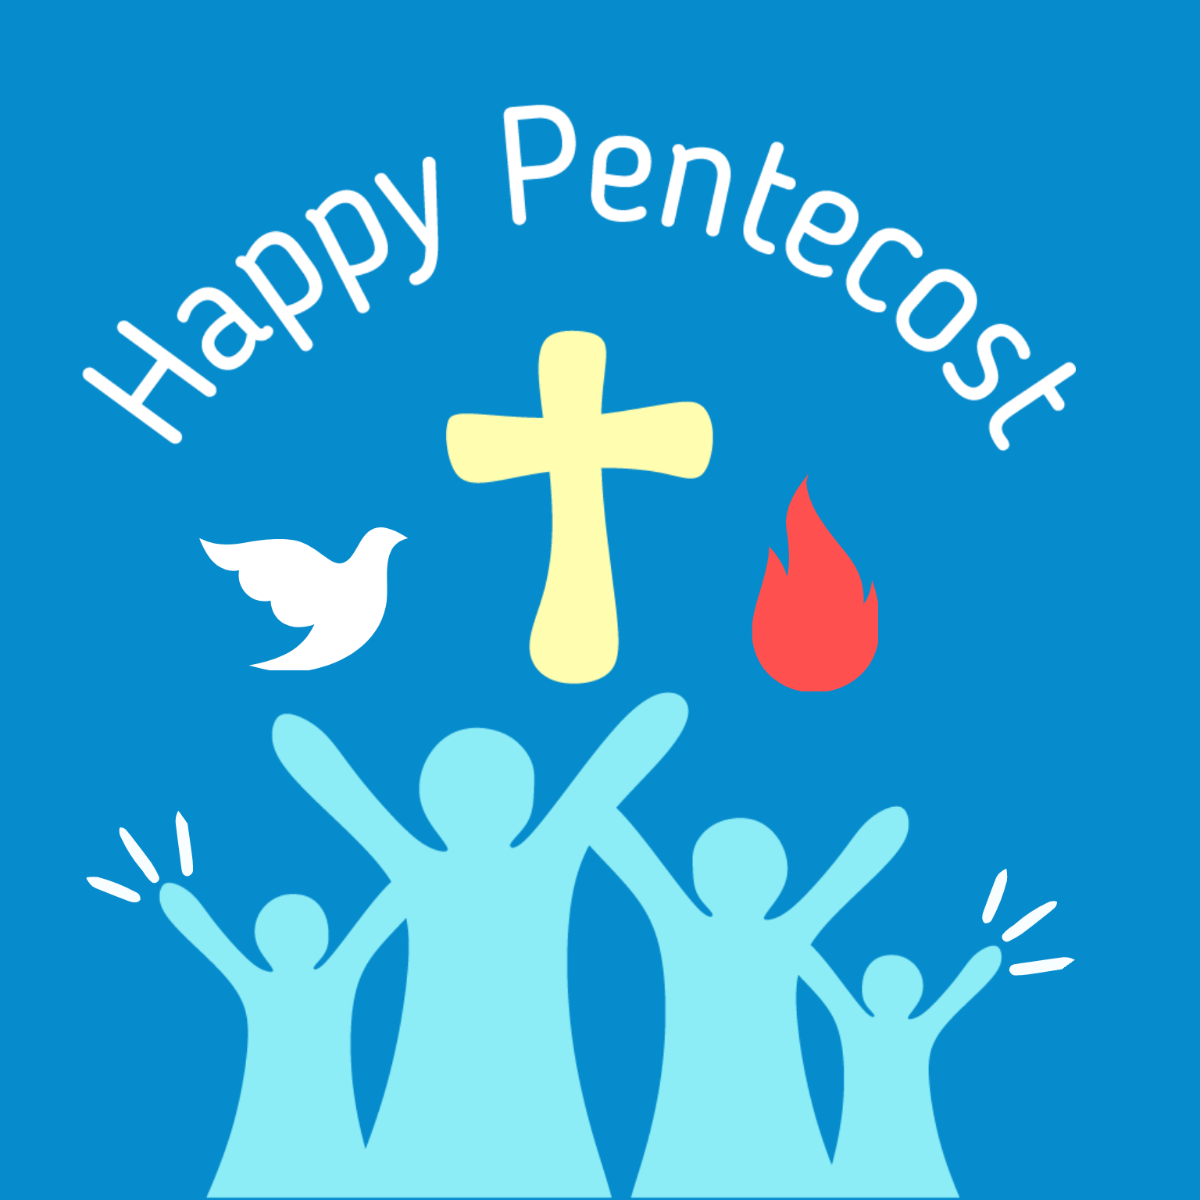 Pentecost Celebration Vector